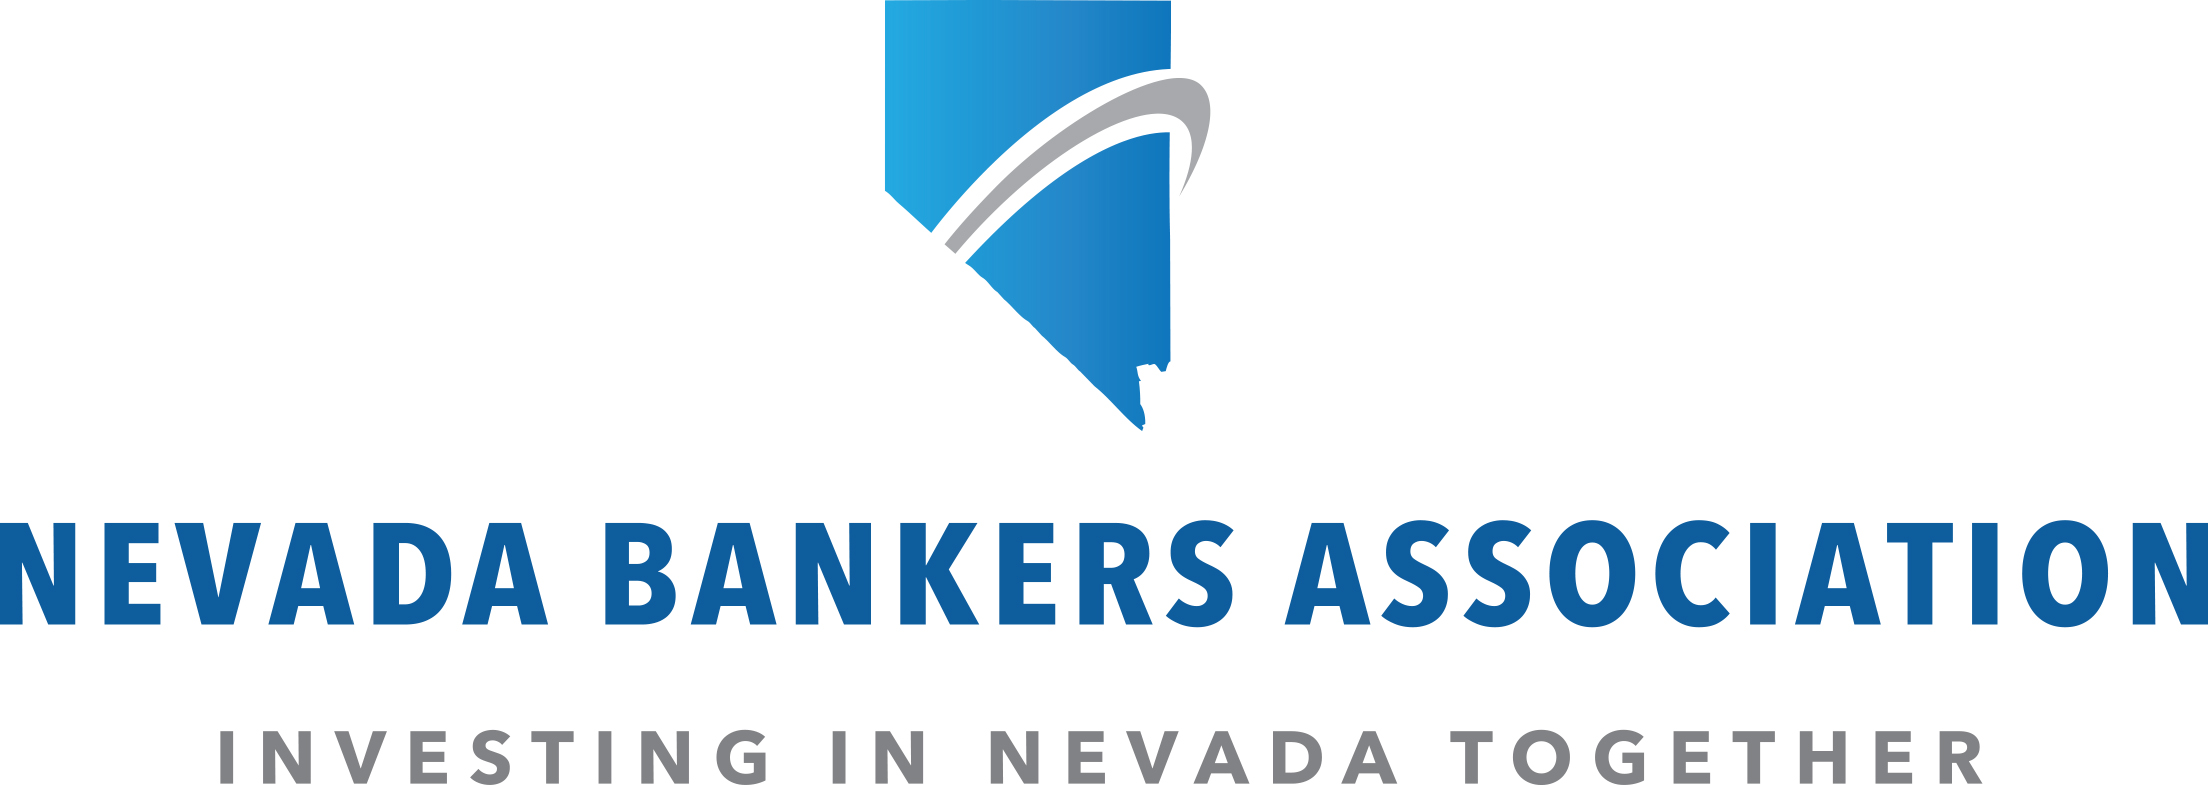 NV Bankers Association Logo FINAL-770152e6